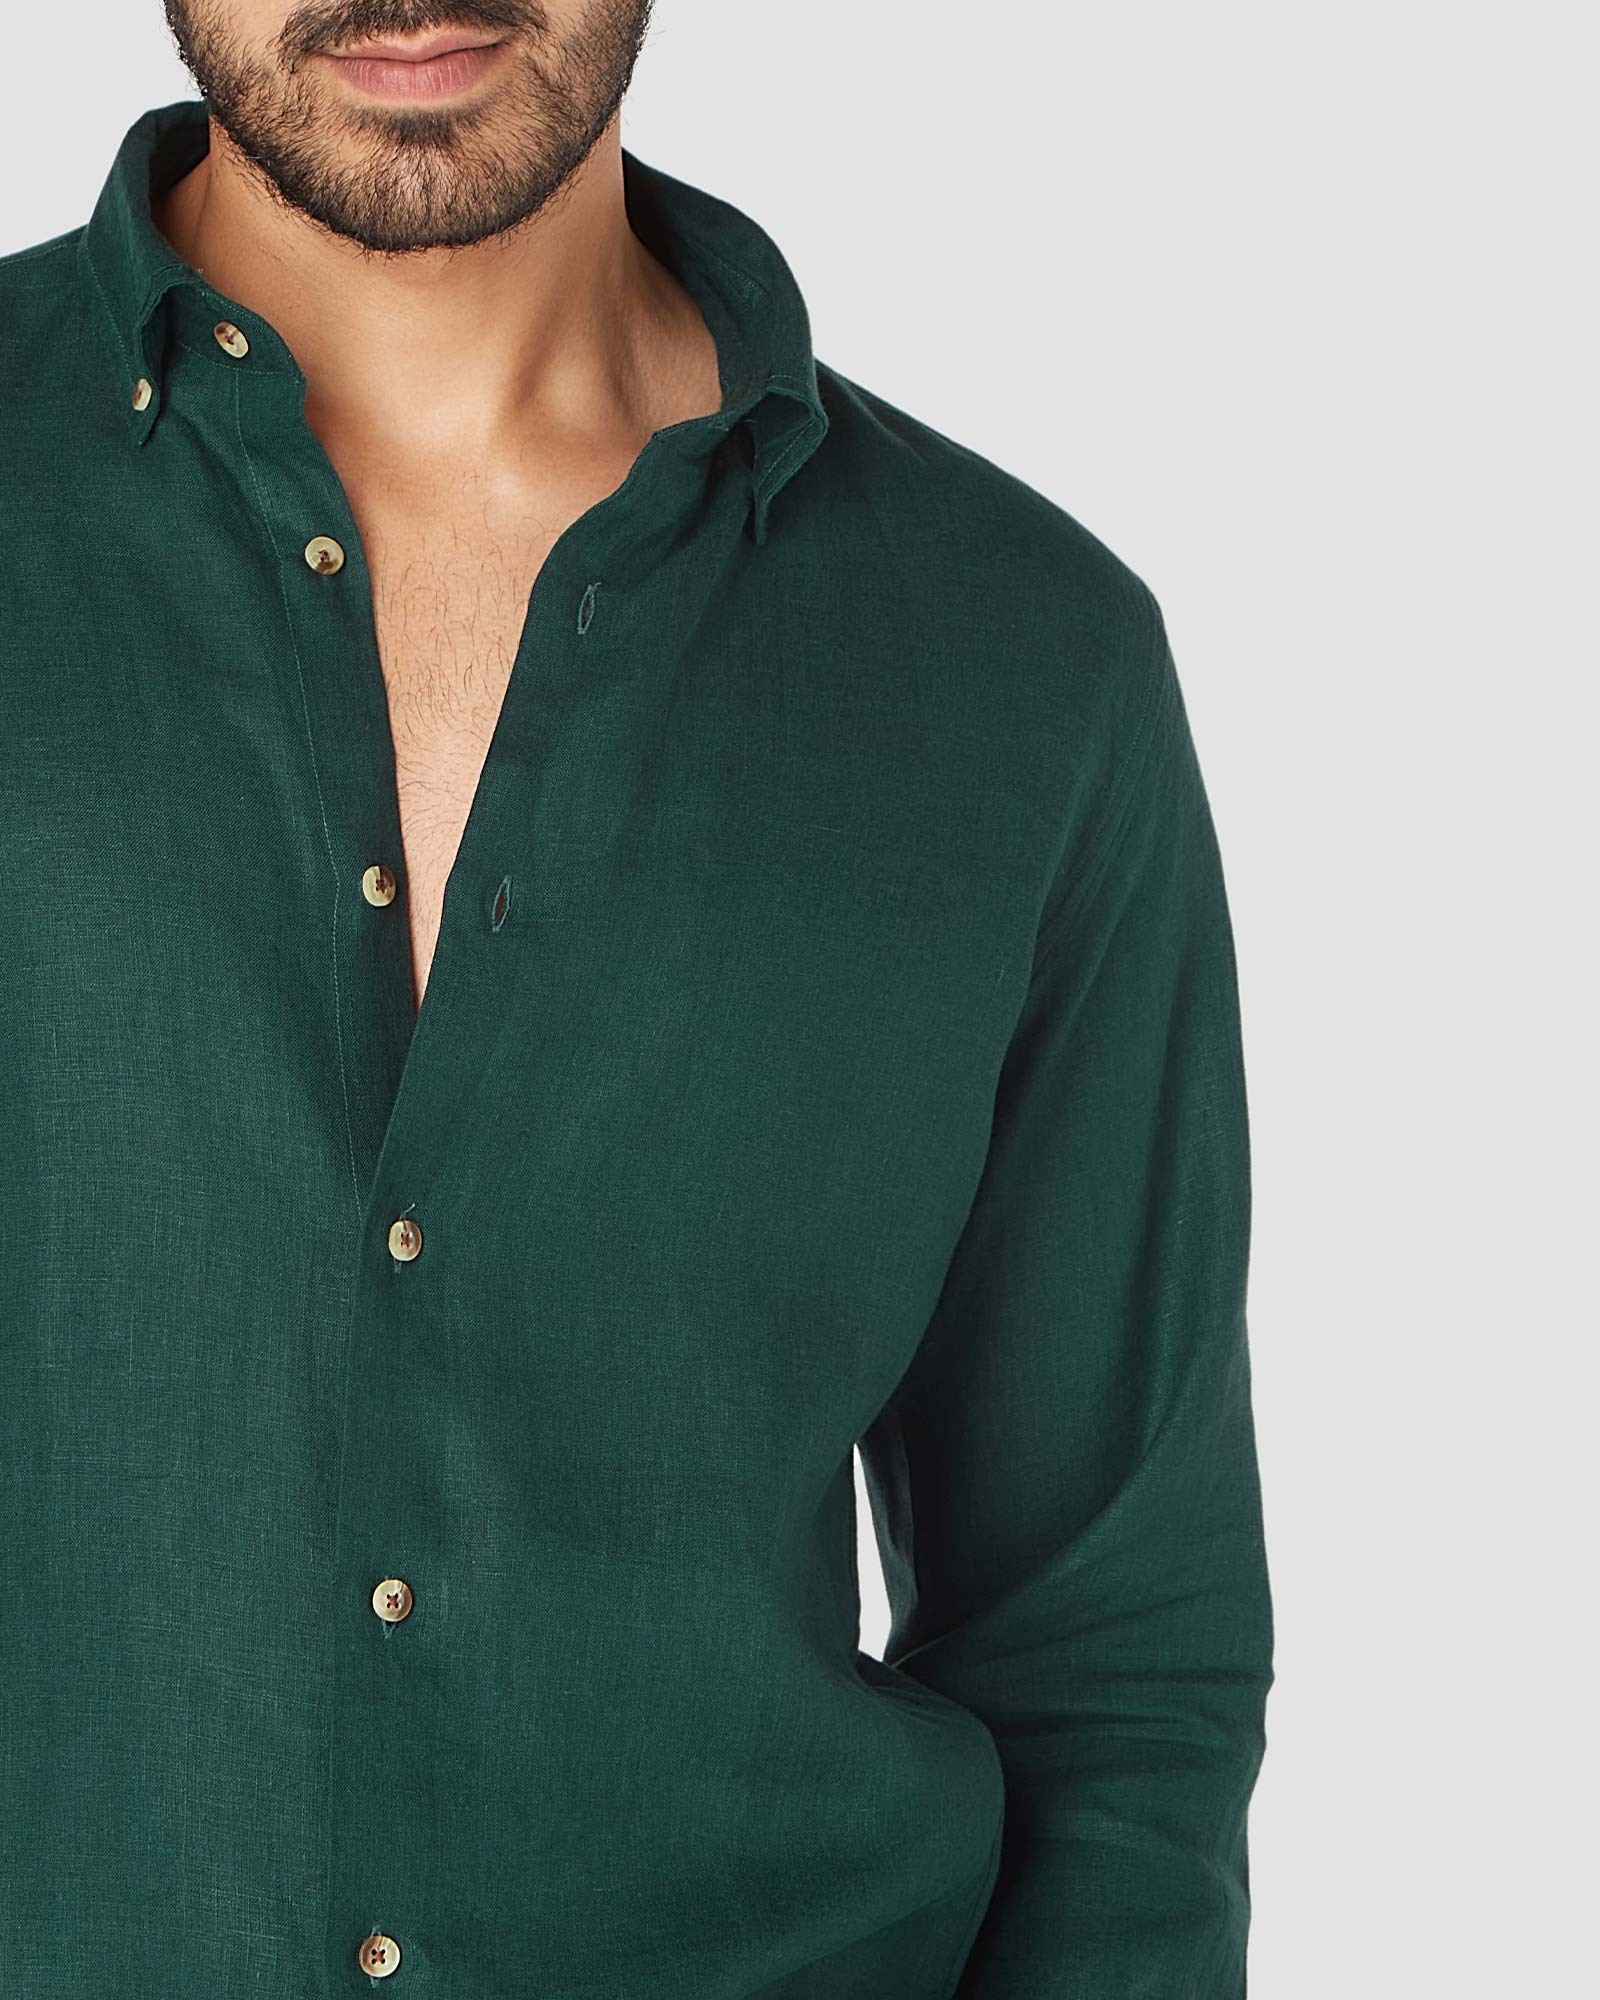 Bombay Shirt Company - Emerald Night Linen Shirt